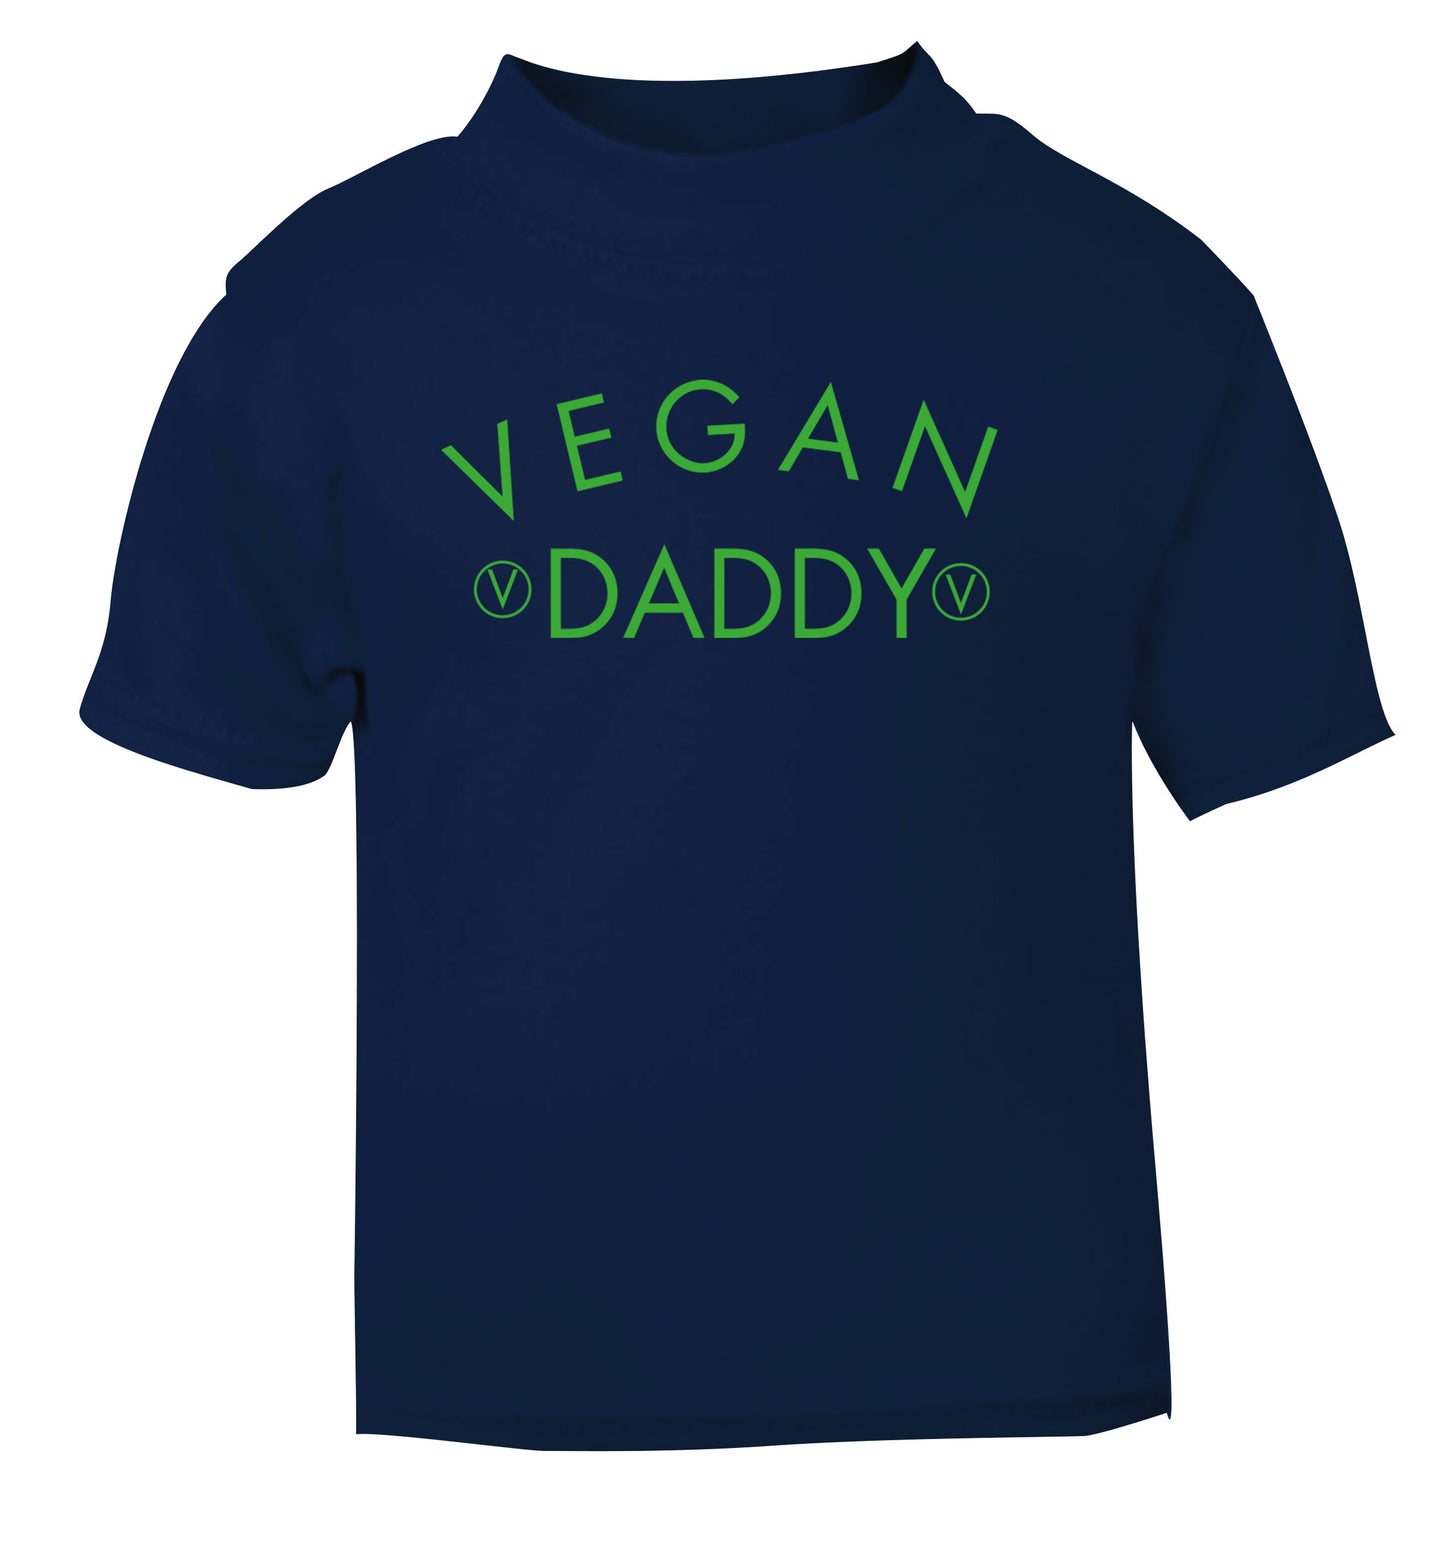 Vegan daddy navy Baby Toddler Tshirt 2 Years